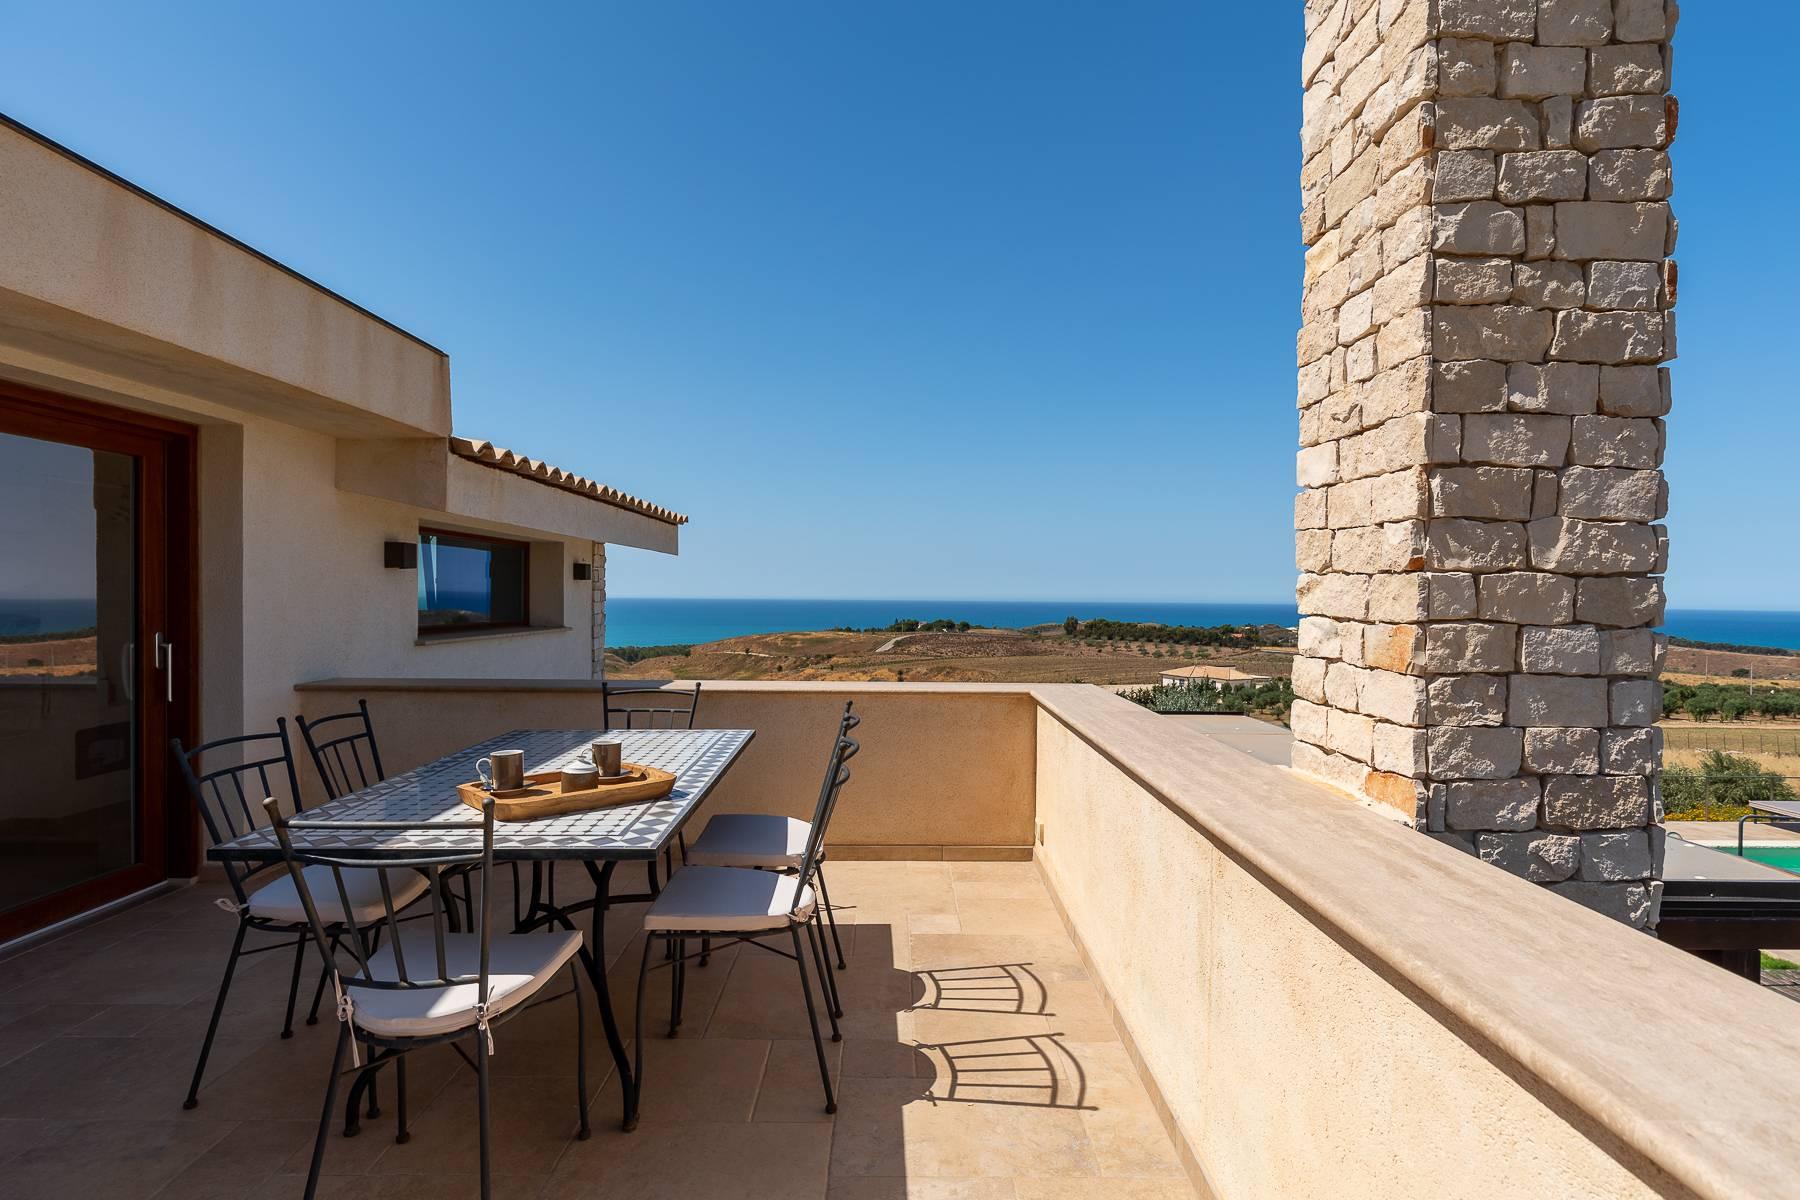 Exclusive villa with stunning views on the Mediterranean sea - 46